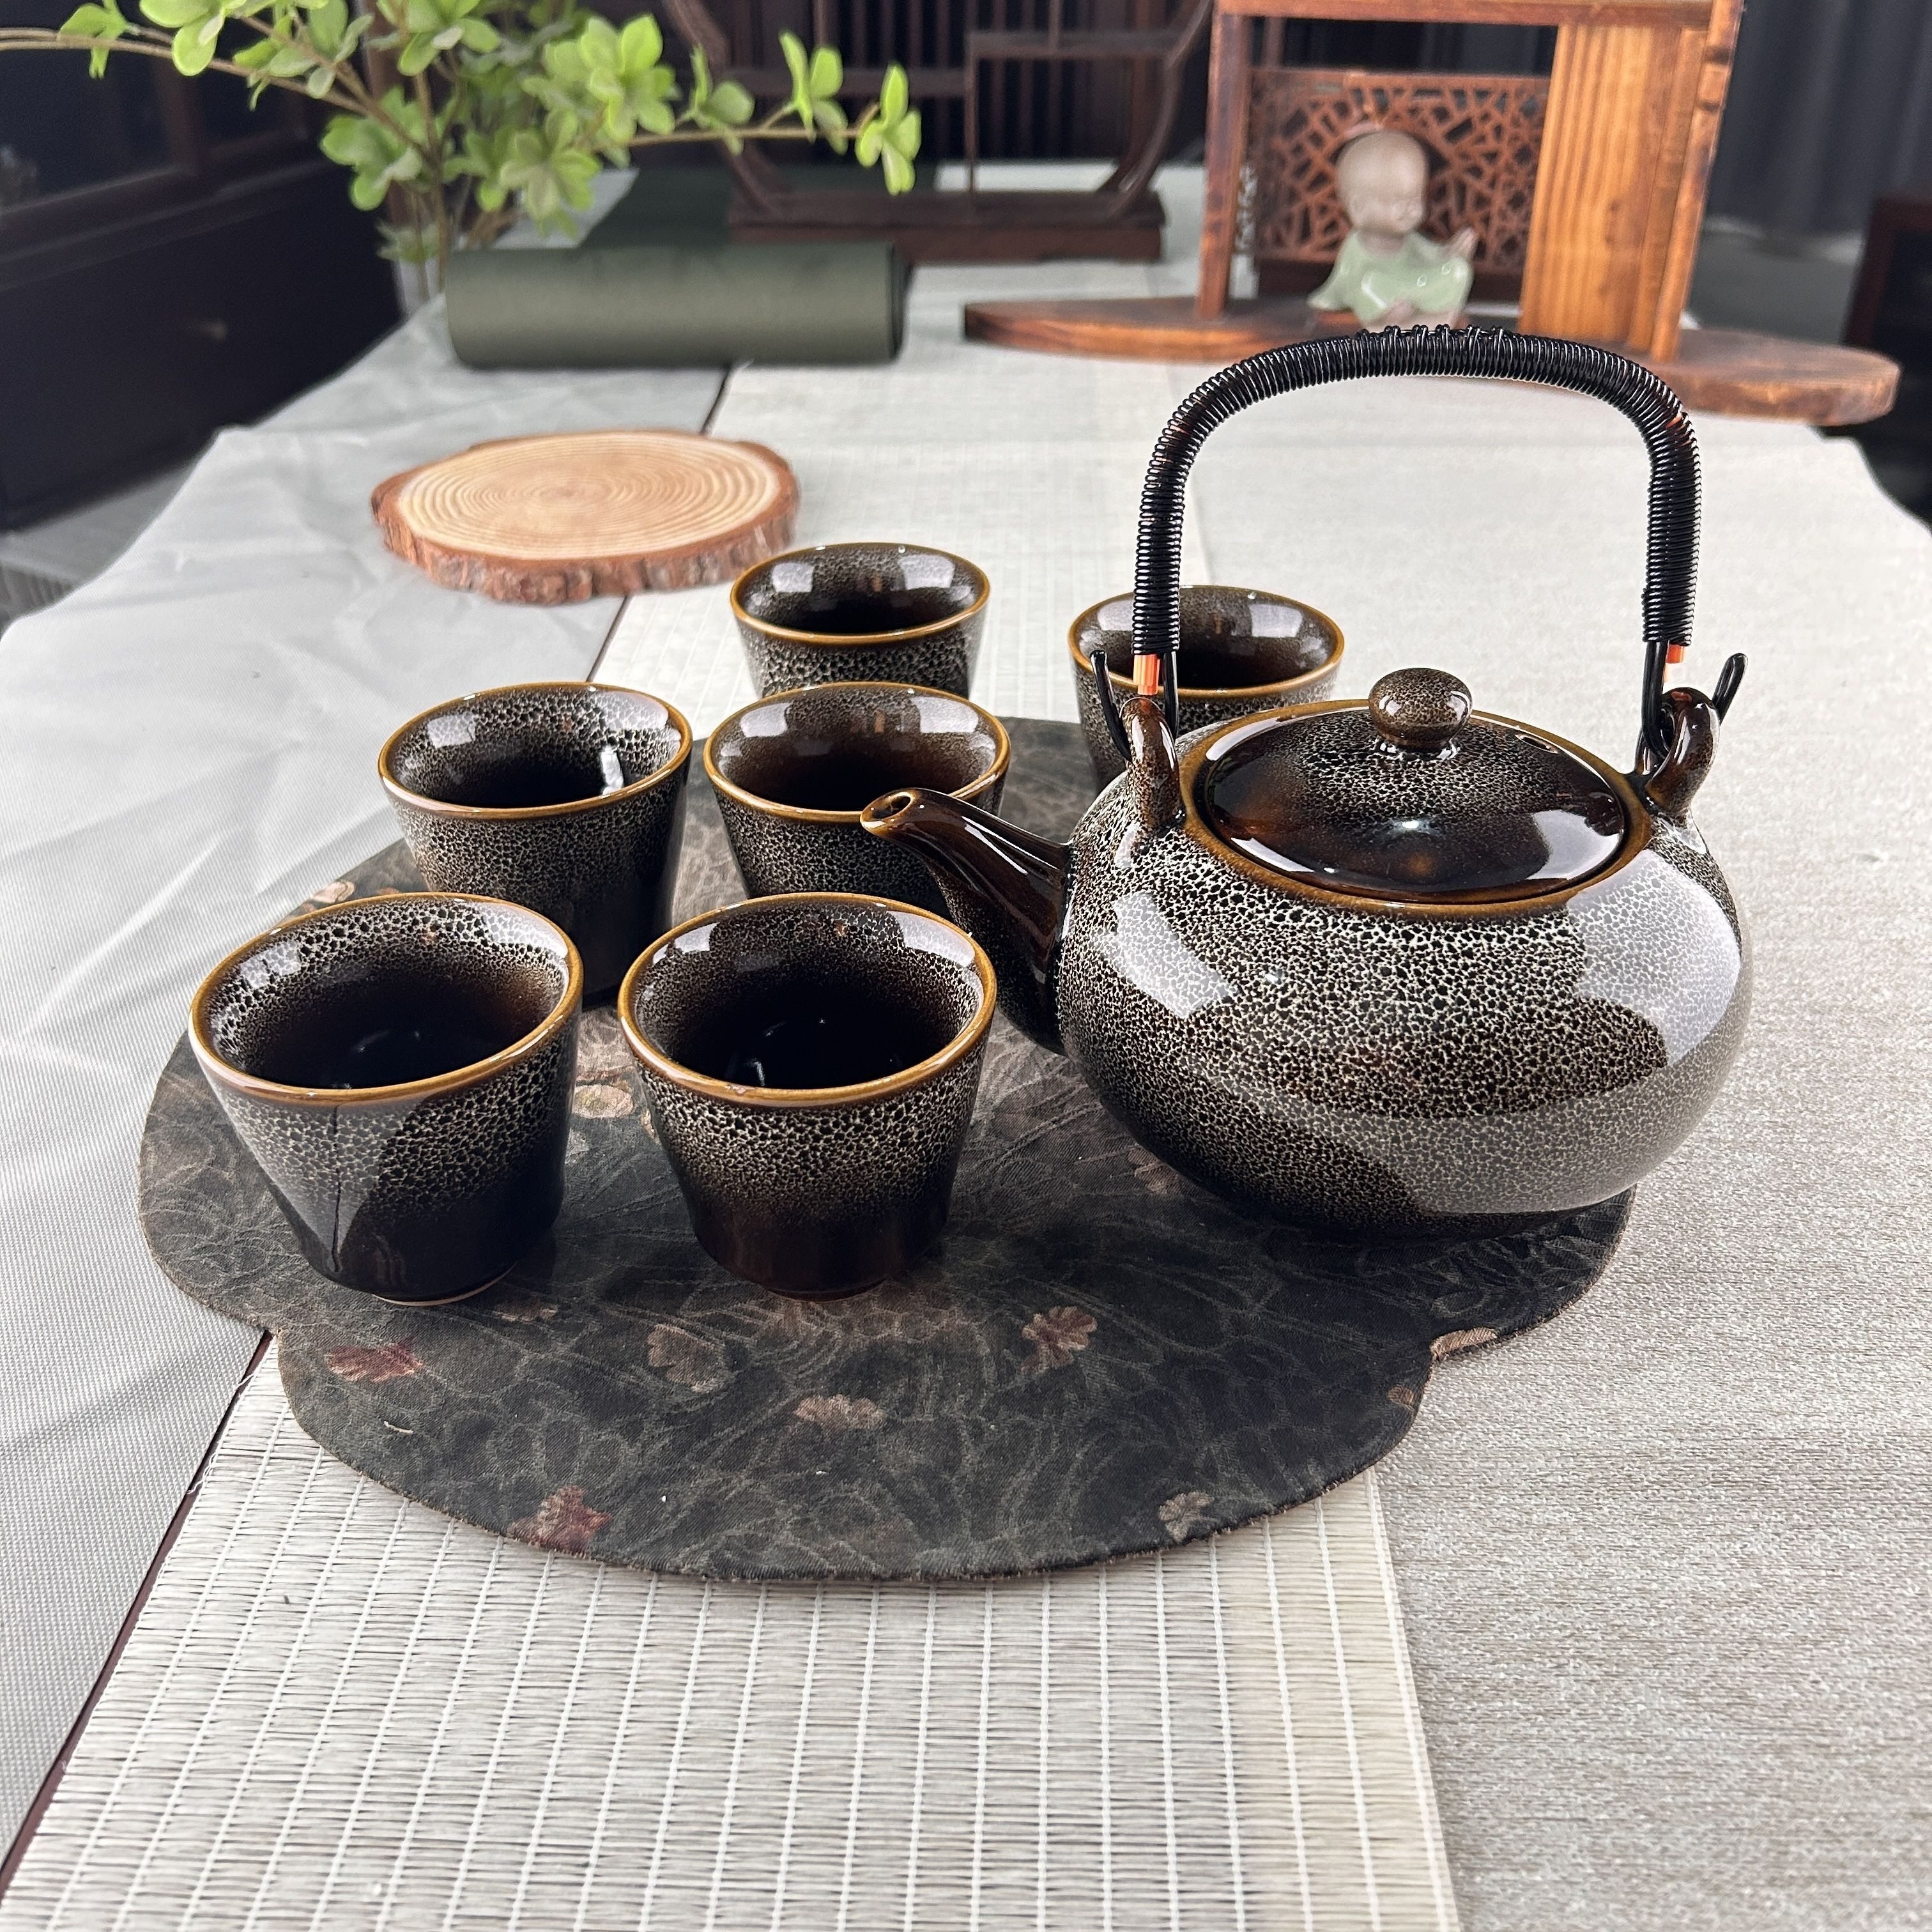 Elegante teiera in ceramica vintage in stile giapponese